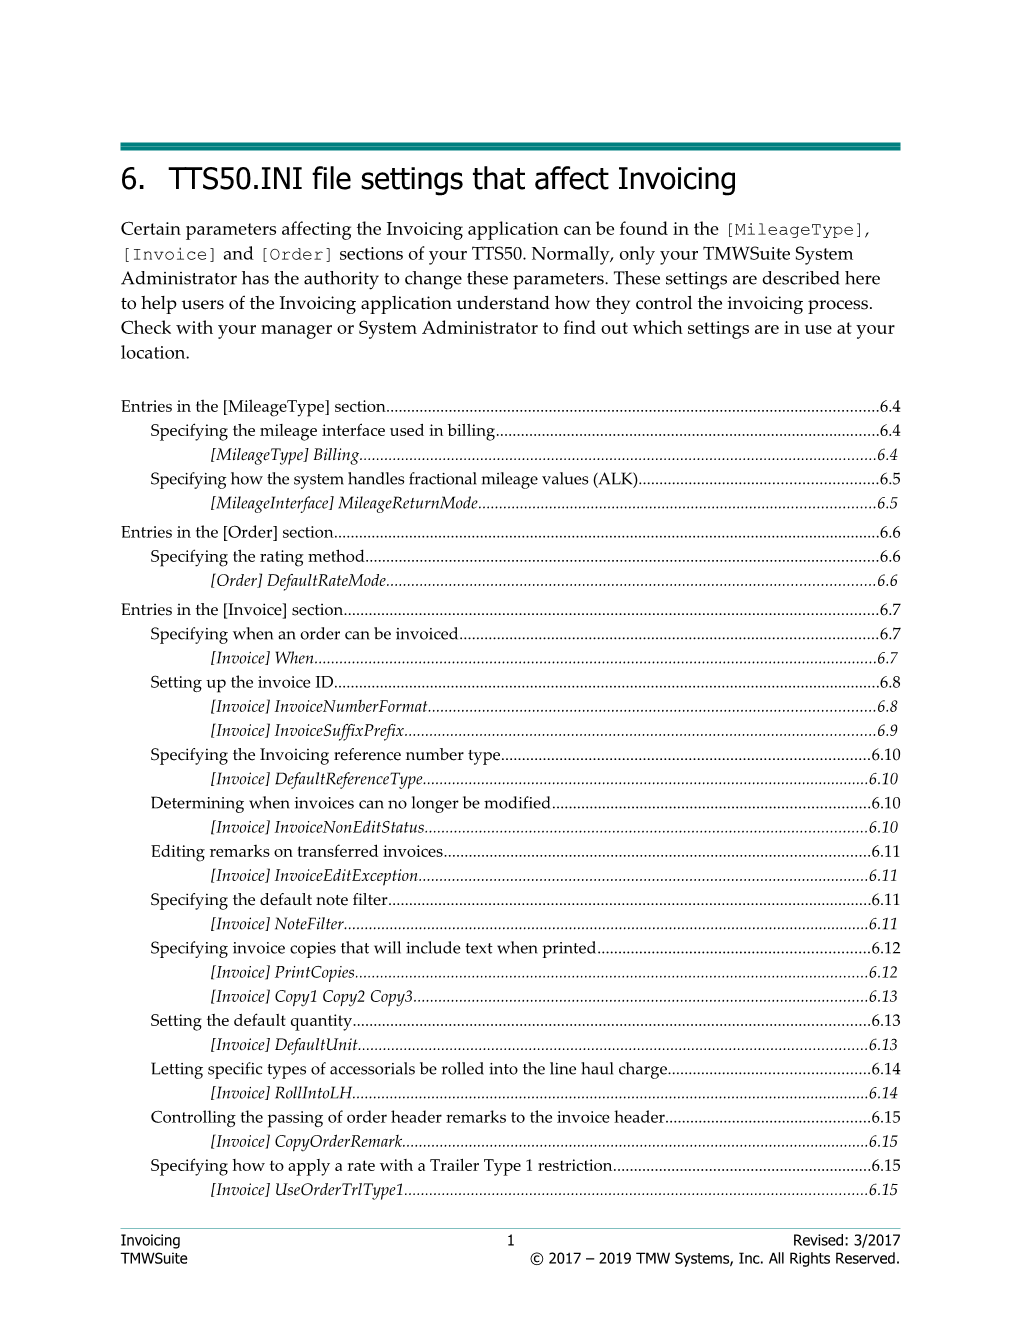 TTS50.INI File Settings That Affect Invoicing